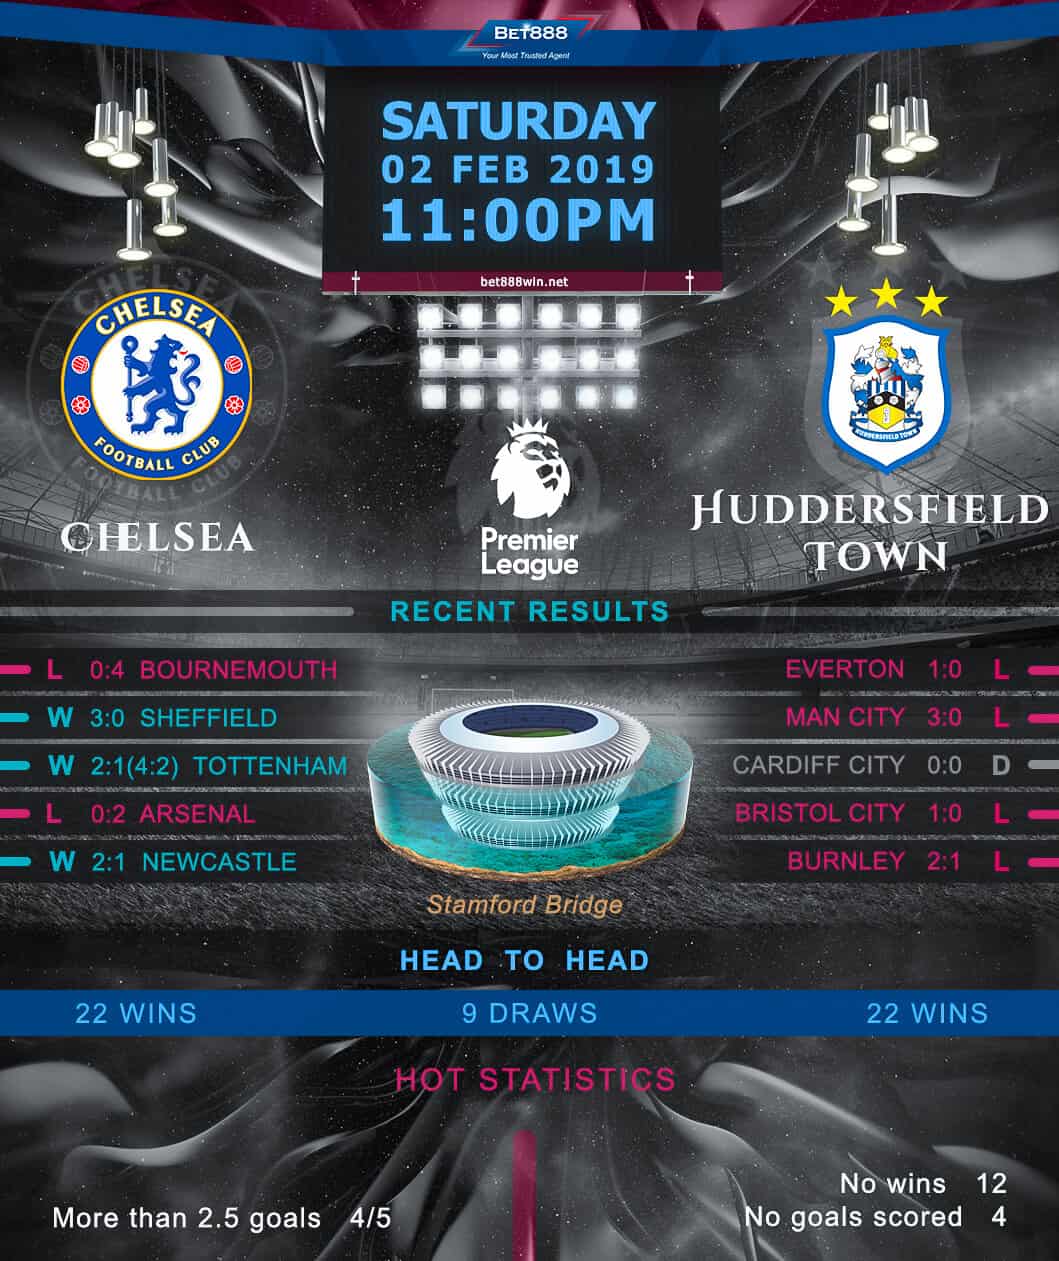 Chelsea vs Huddersfield Town﻿ 02/02/19